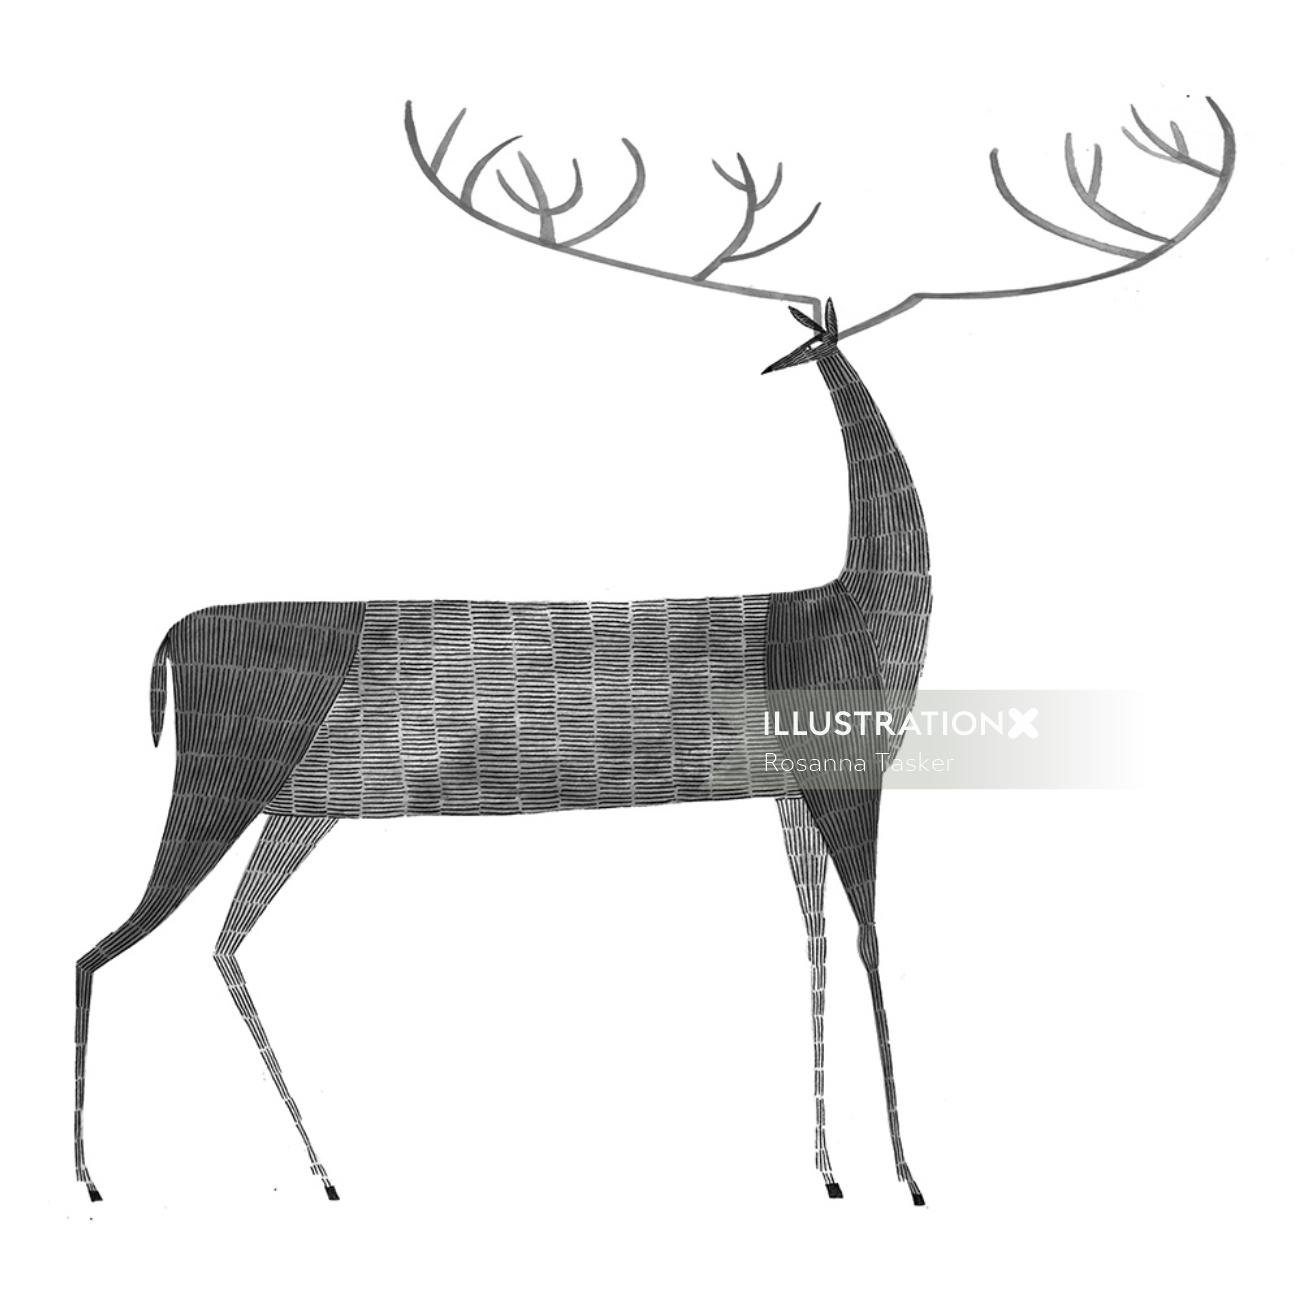 Illustration of Moose